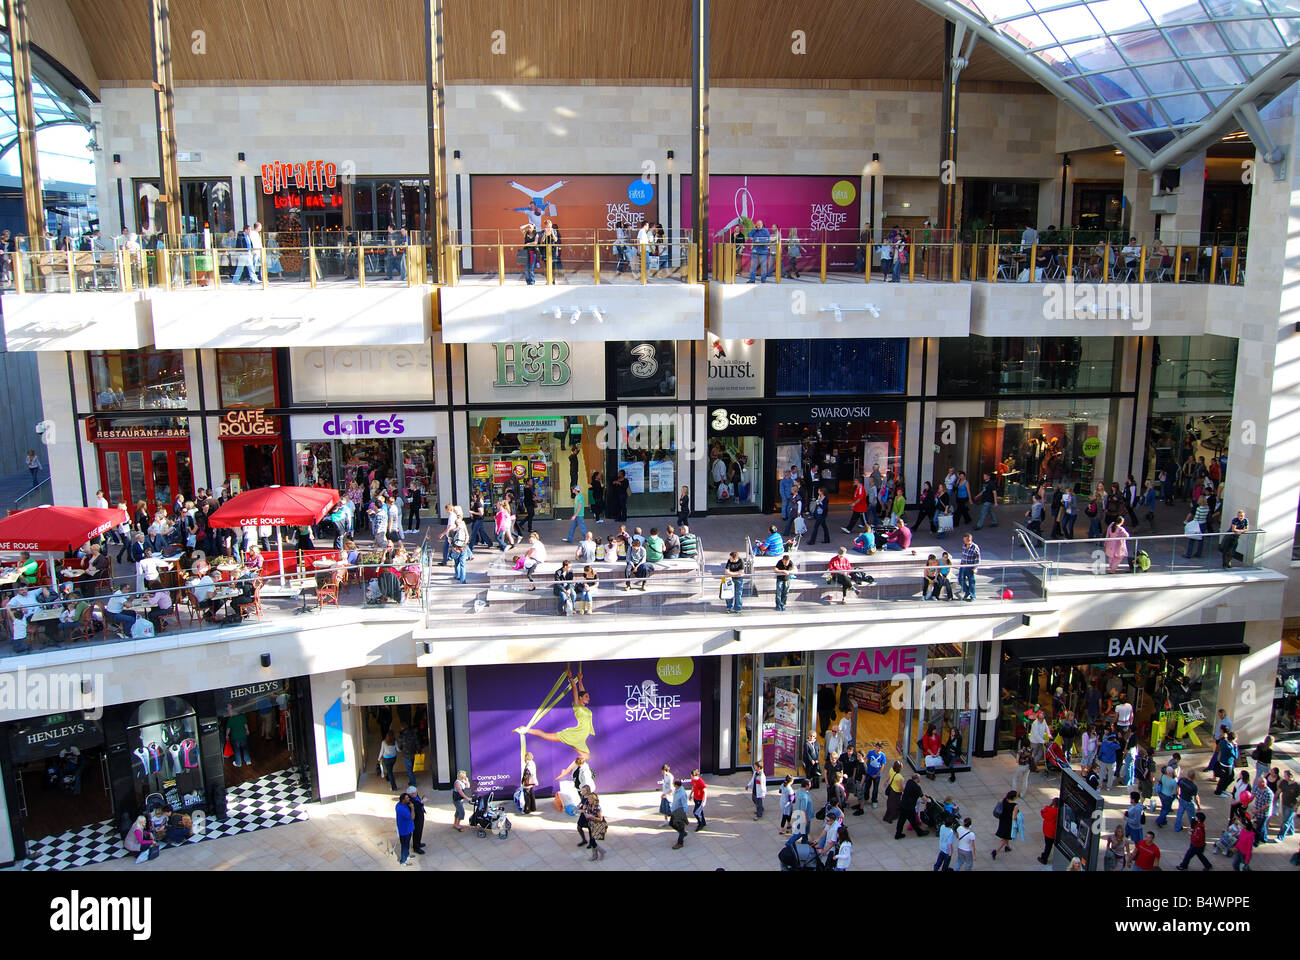 Le centre commercial Cabot Circus, Broadmead atrium, Bristol, Angleterre, Royaume-Uni Banque D'Images